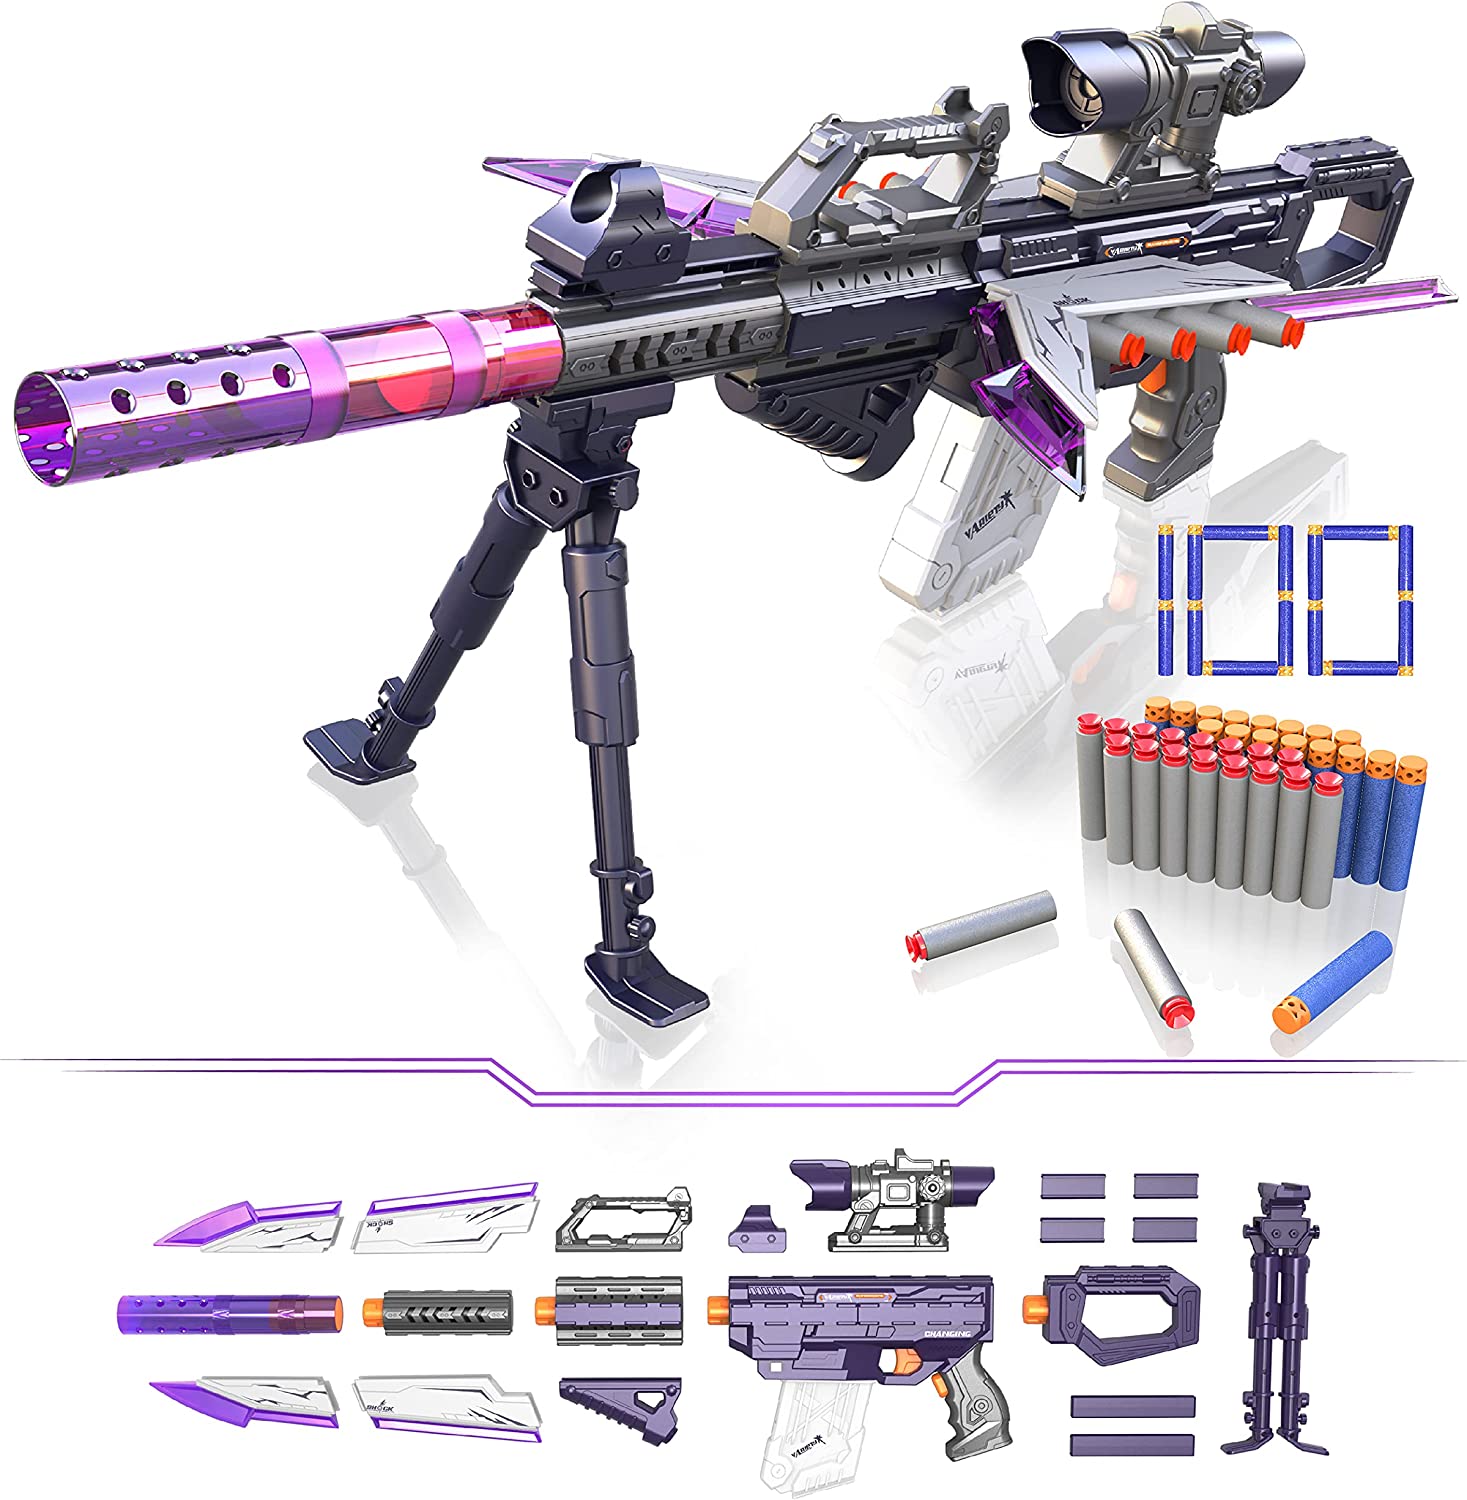 YKToyz DIY Motorized Blaster Toy Gun Compatible with Nerf Bullets